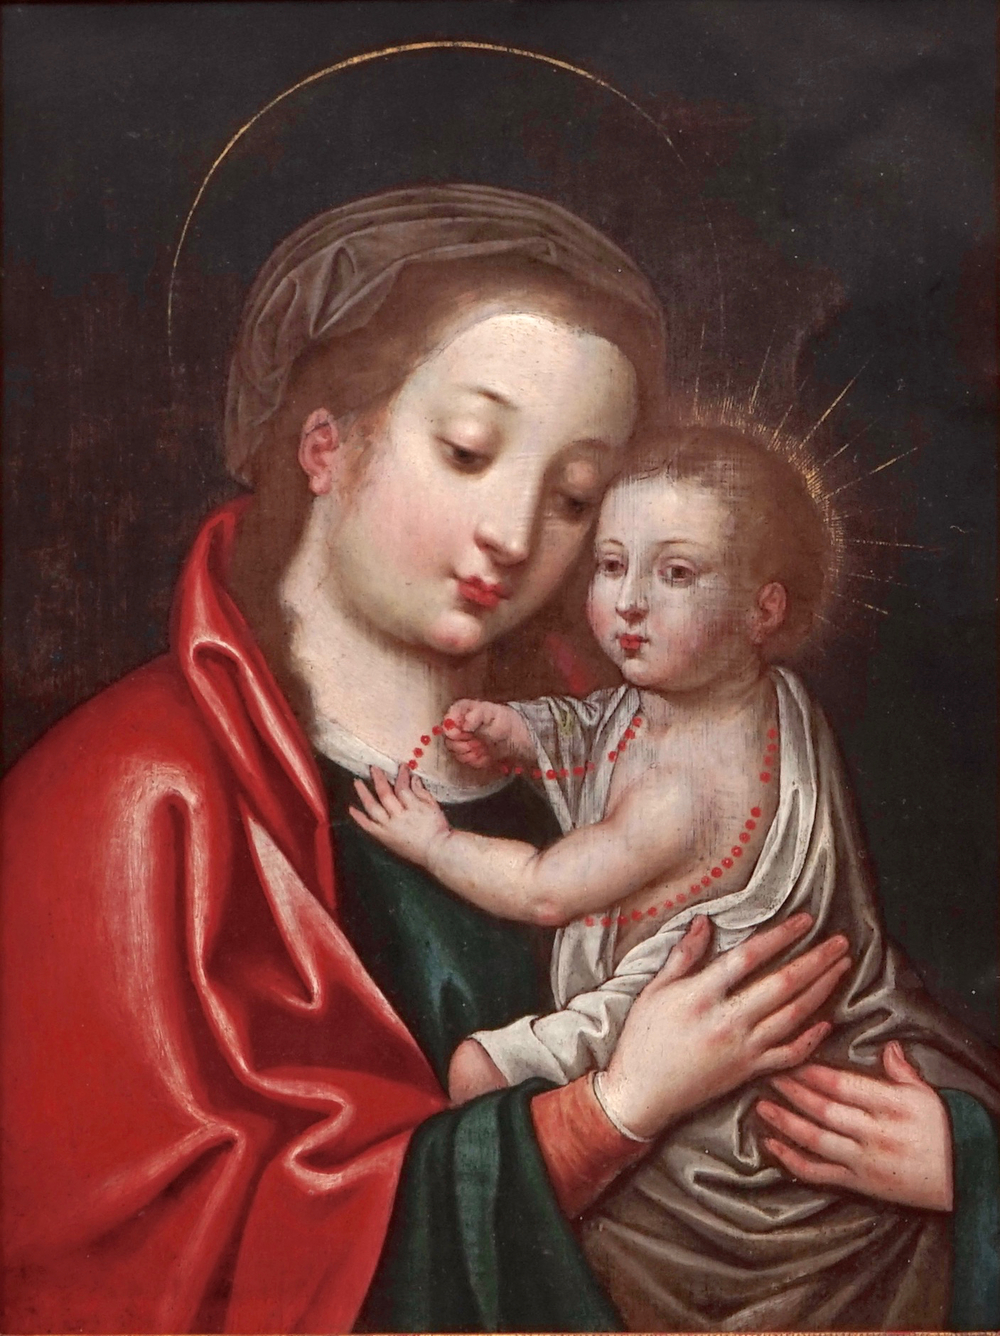 Flemisch school, Madonna with child, oil on copper, 16th C.